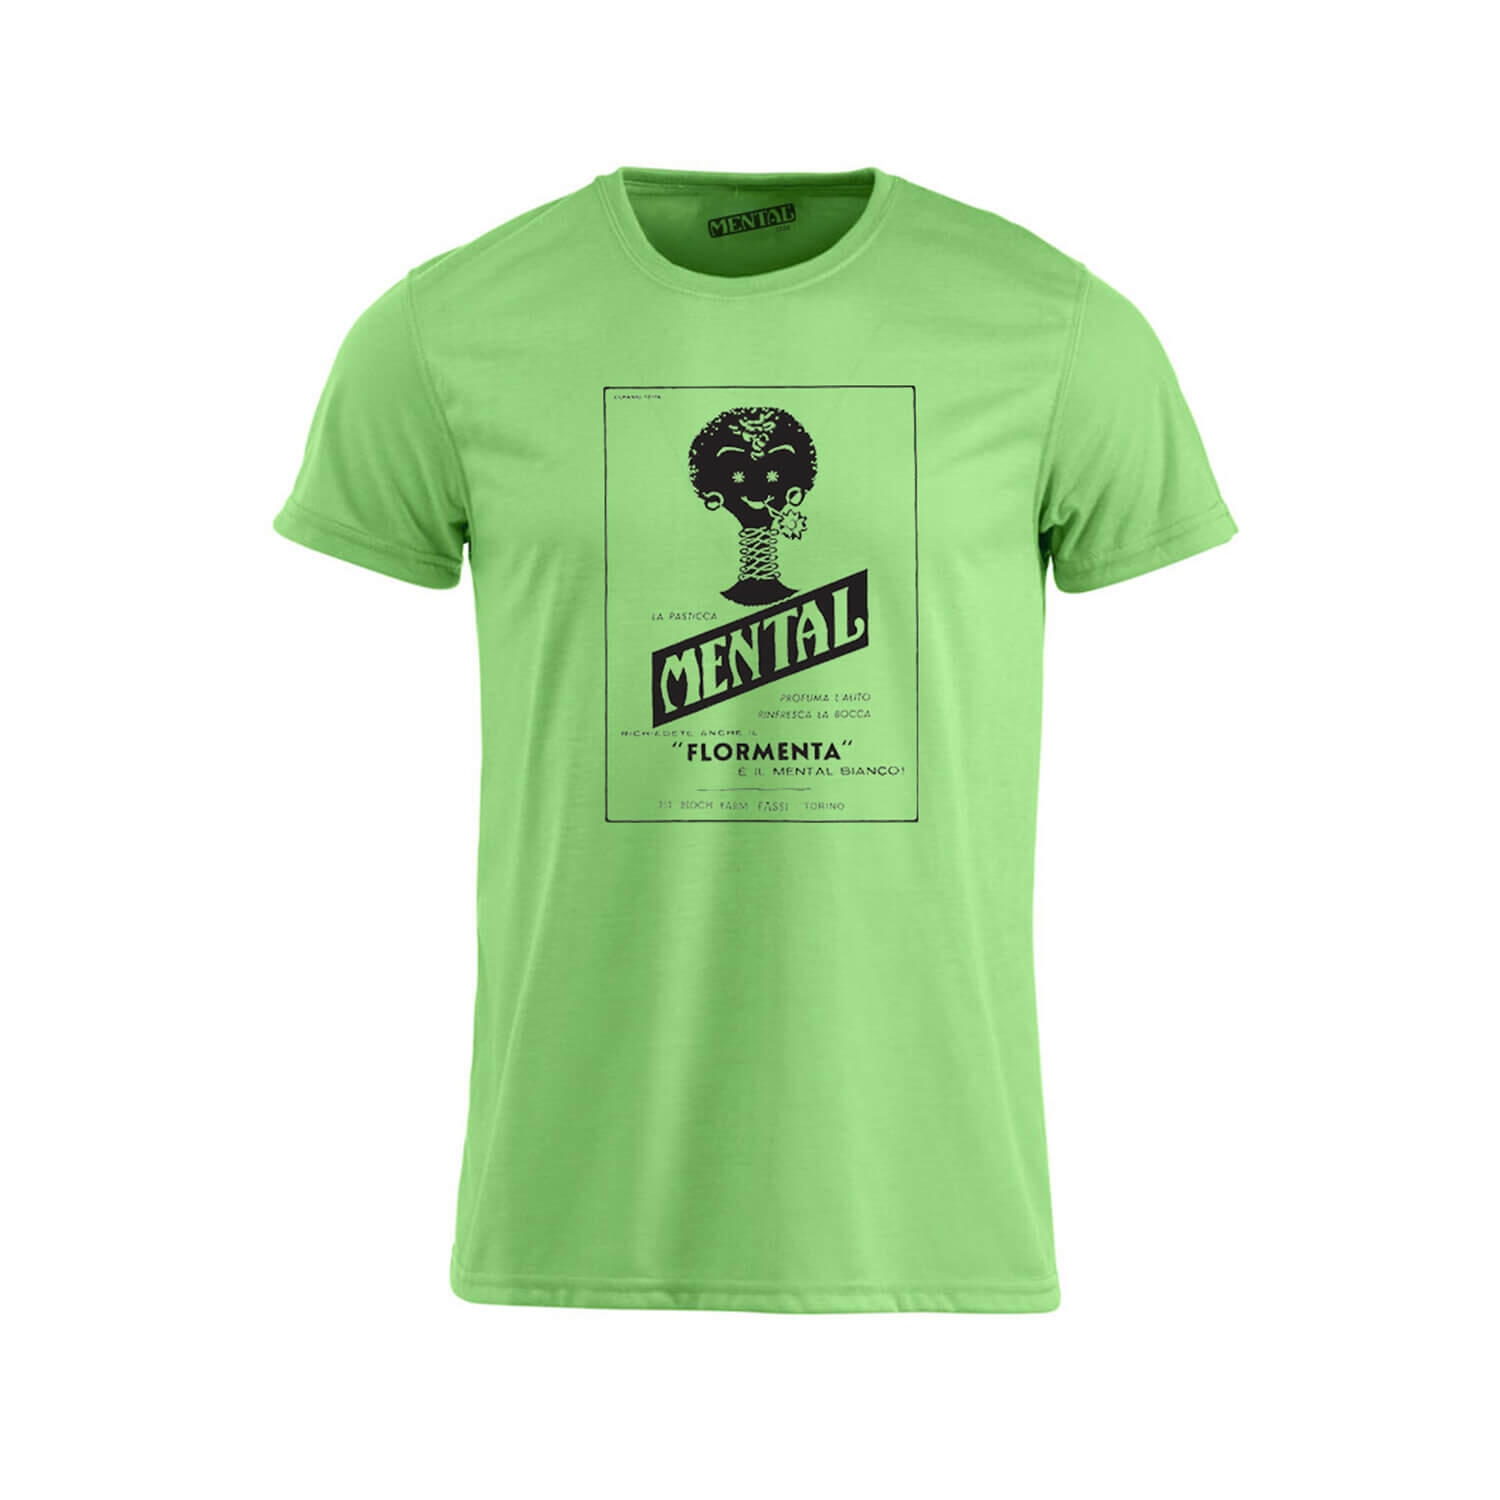 T-shirt neon green Vintage Mental - size XL - T-shirt